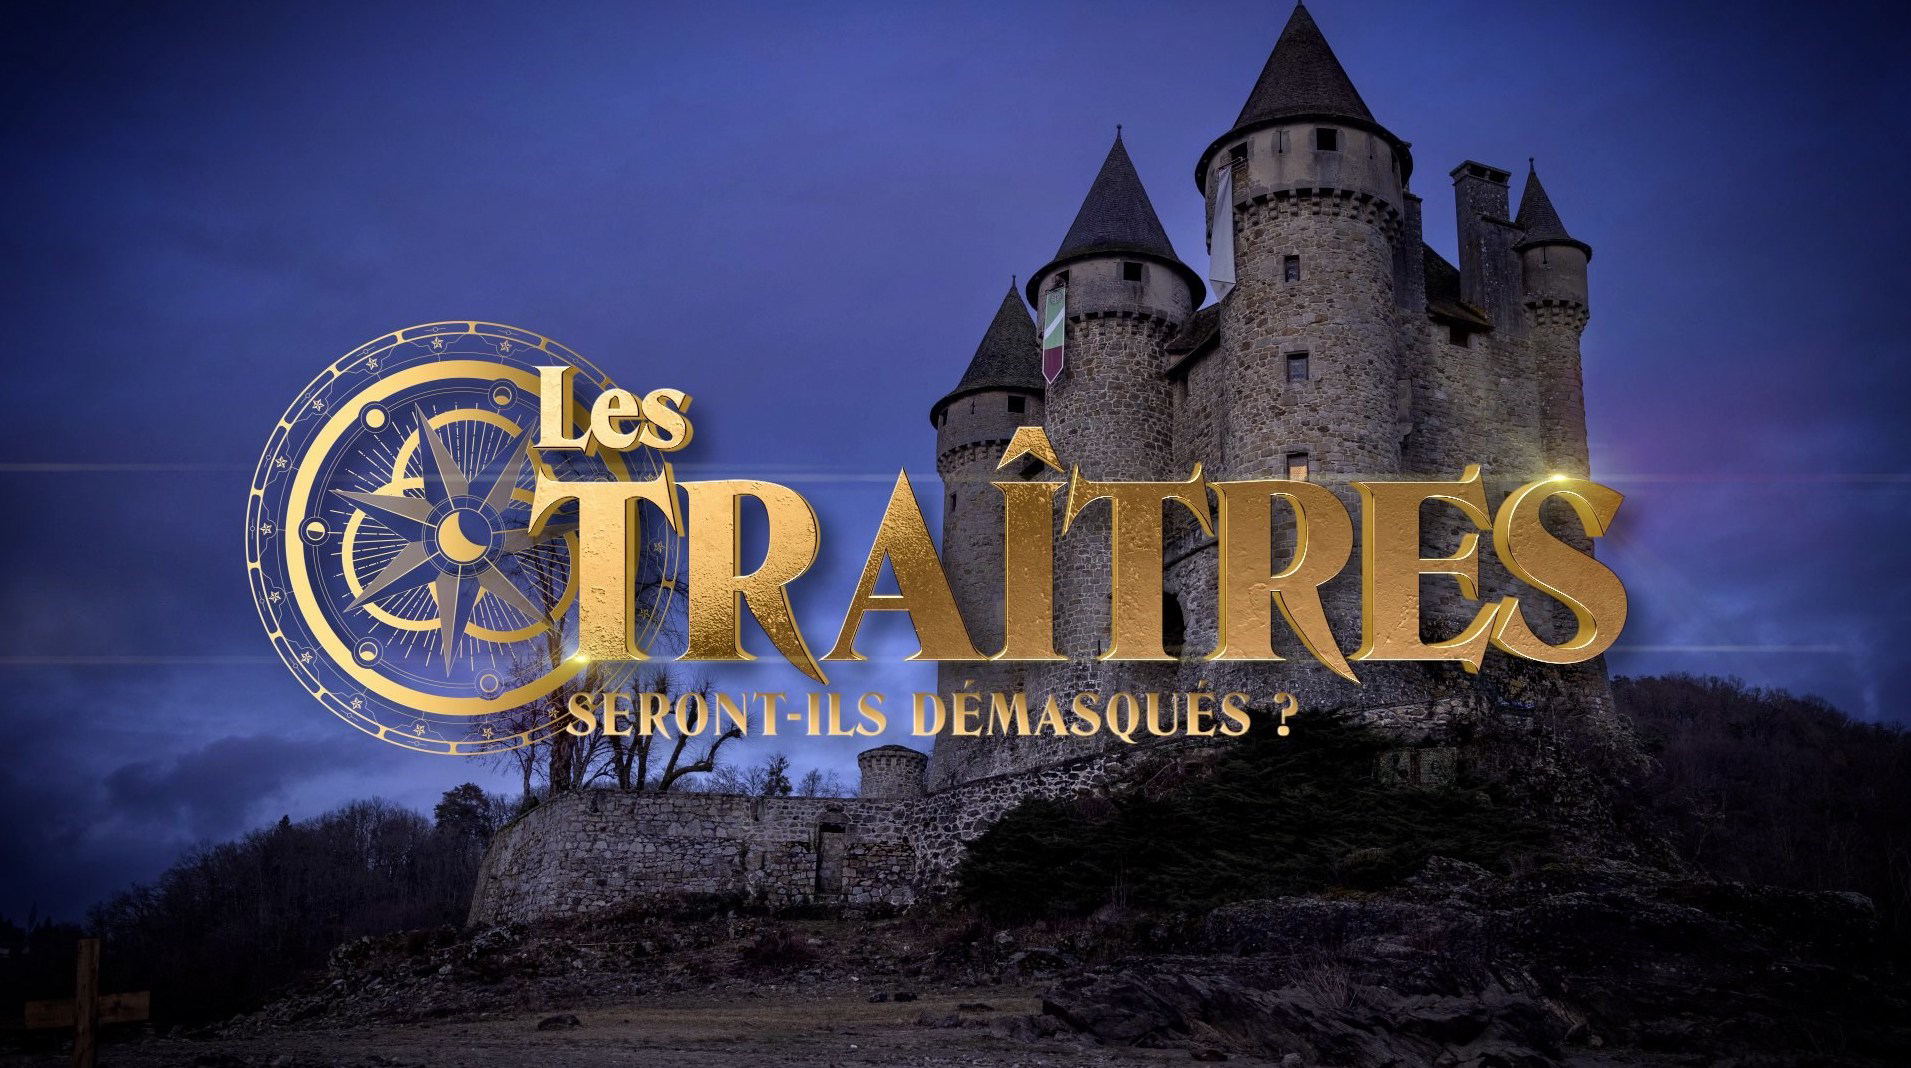 The Traitors (U.S.) Season 2 - Cast, Trailer, Release Date, Host - Parade